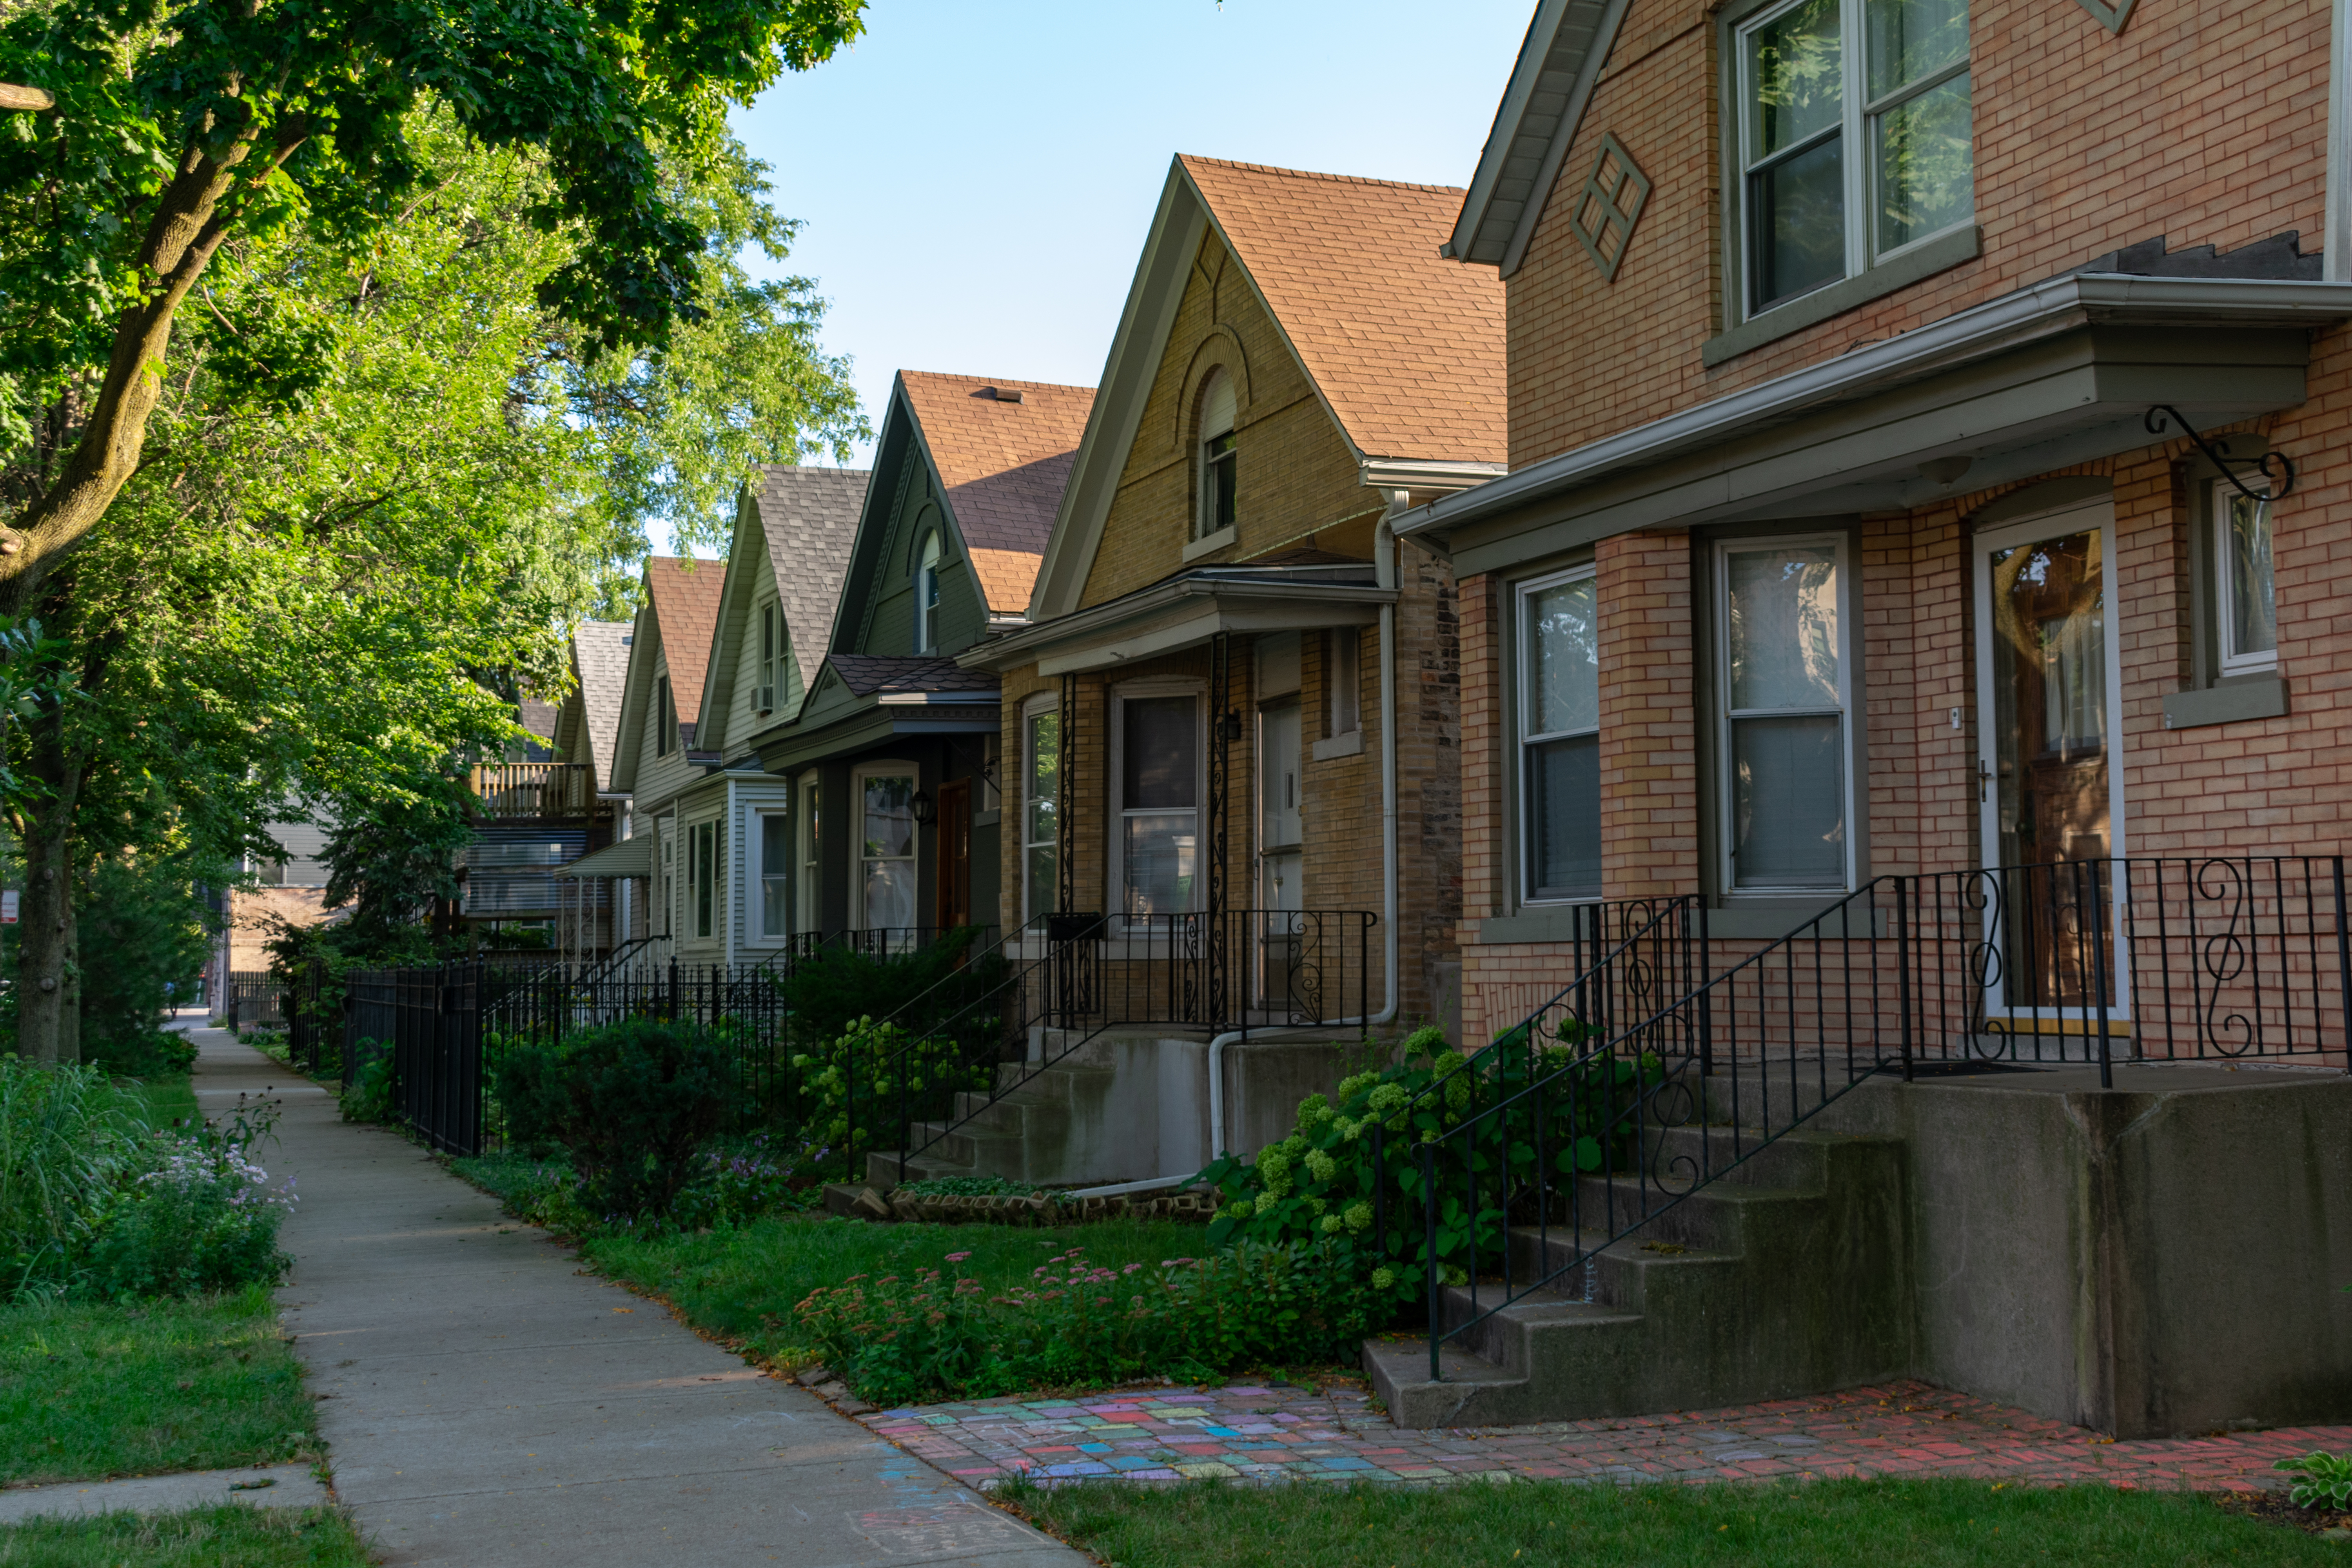 A row of brick homes in a neighborhood.